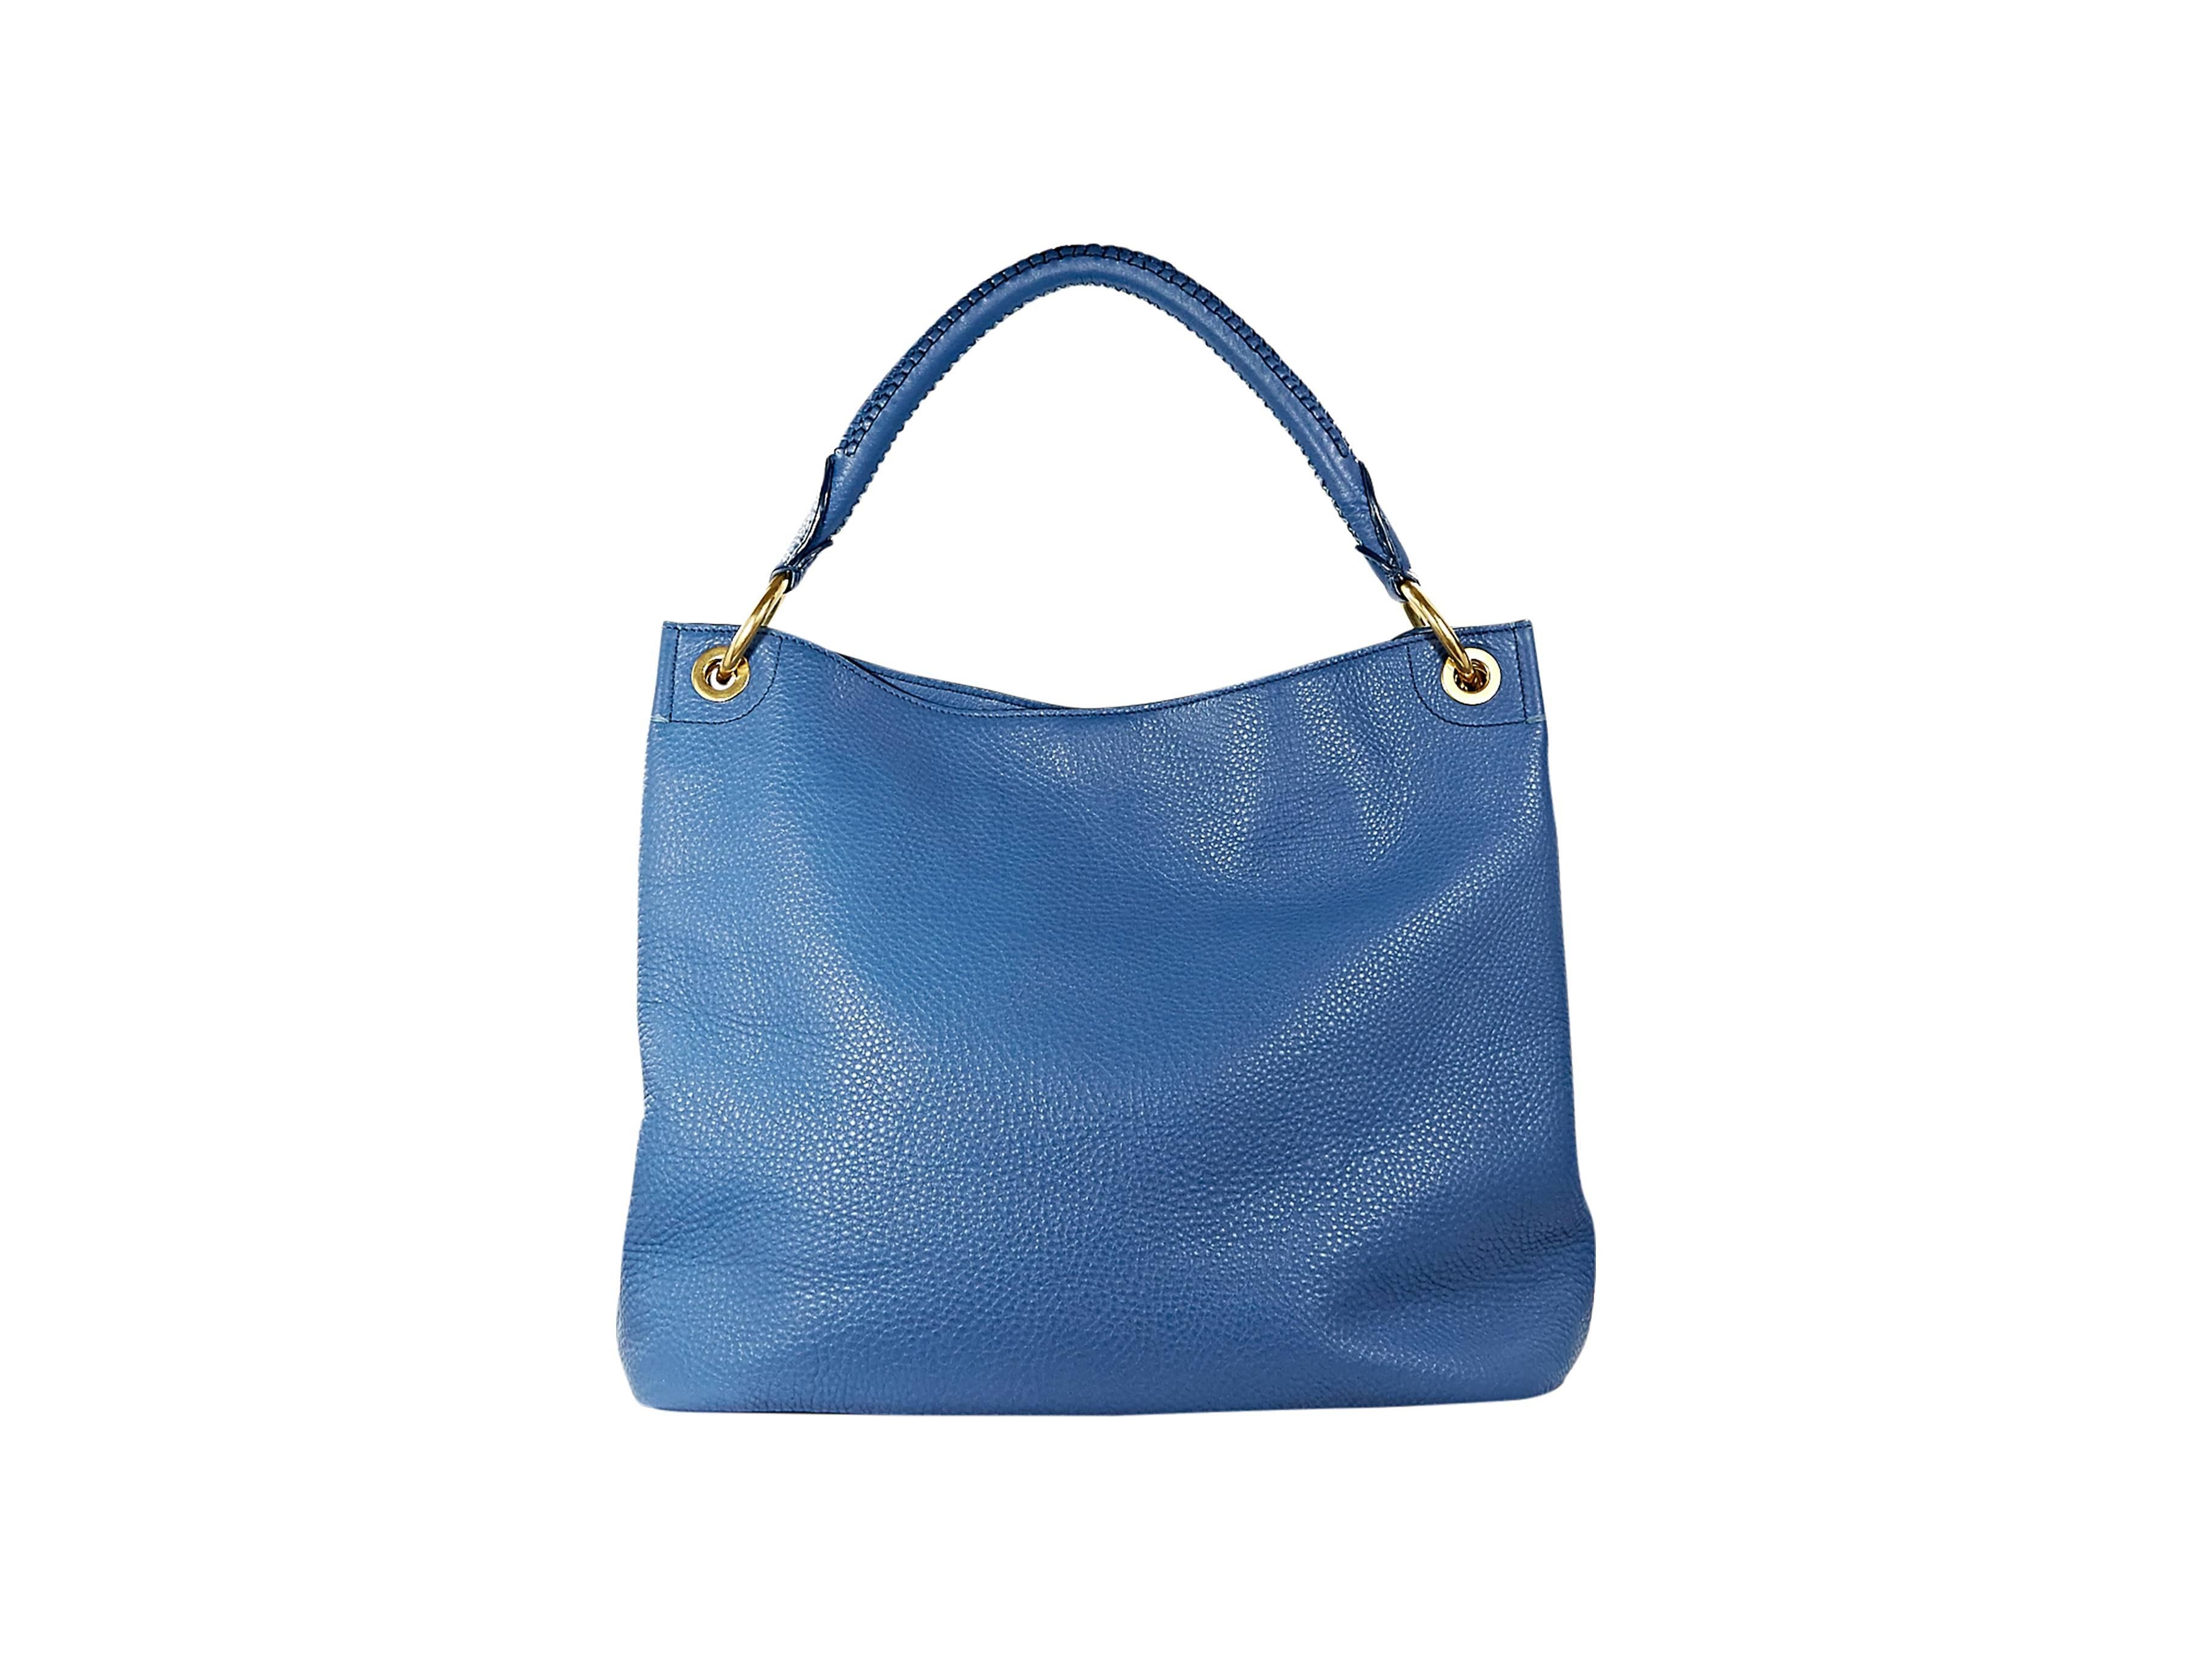 Blue pebbled leather hobo bag Viby Prada.  Single shoulder strap.  Magnetic snap closure.  Lined interior with zip-close pocket.  Goldtone hardware.  16